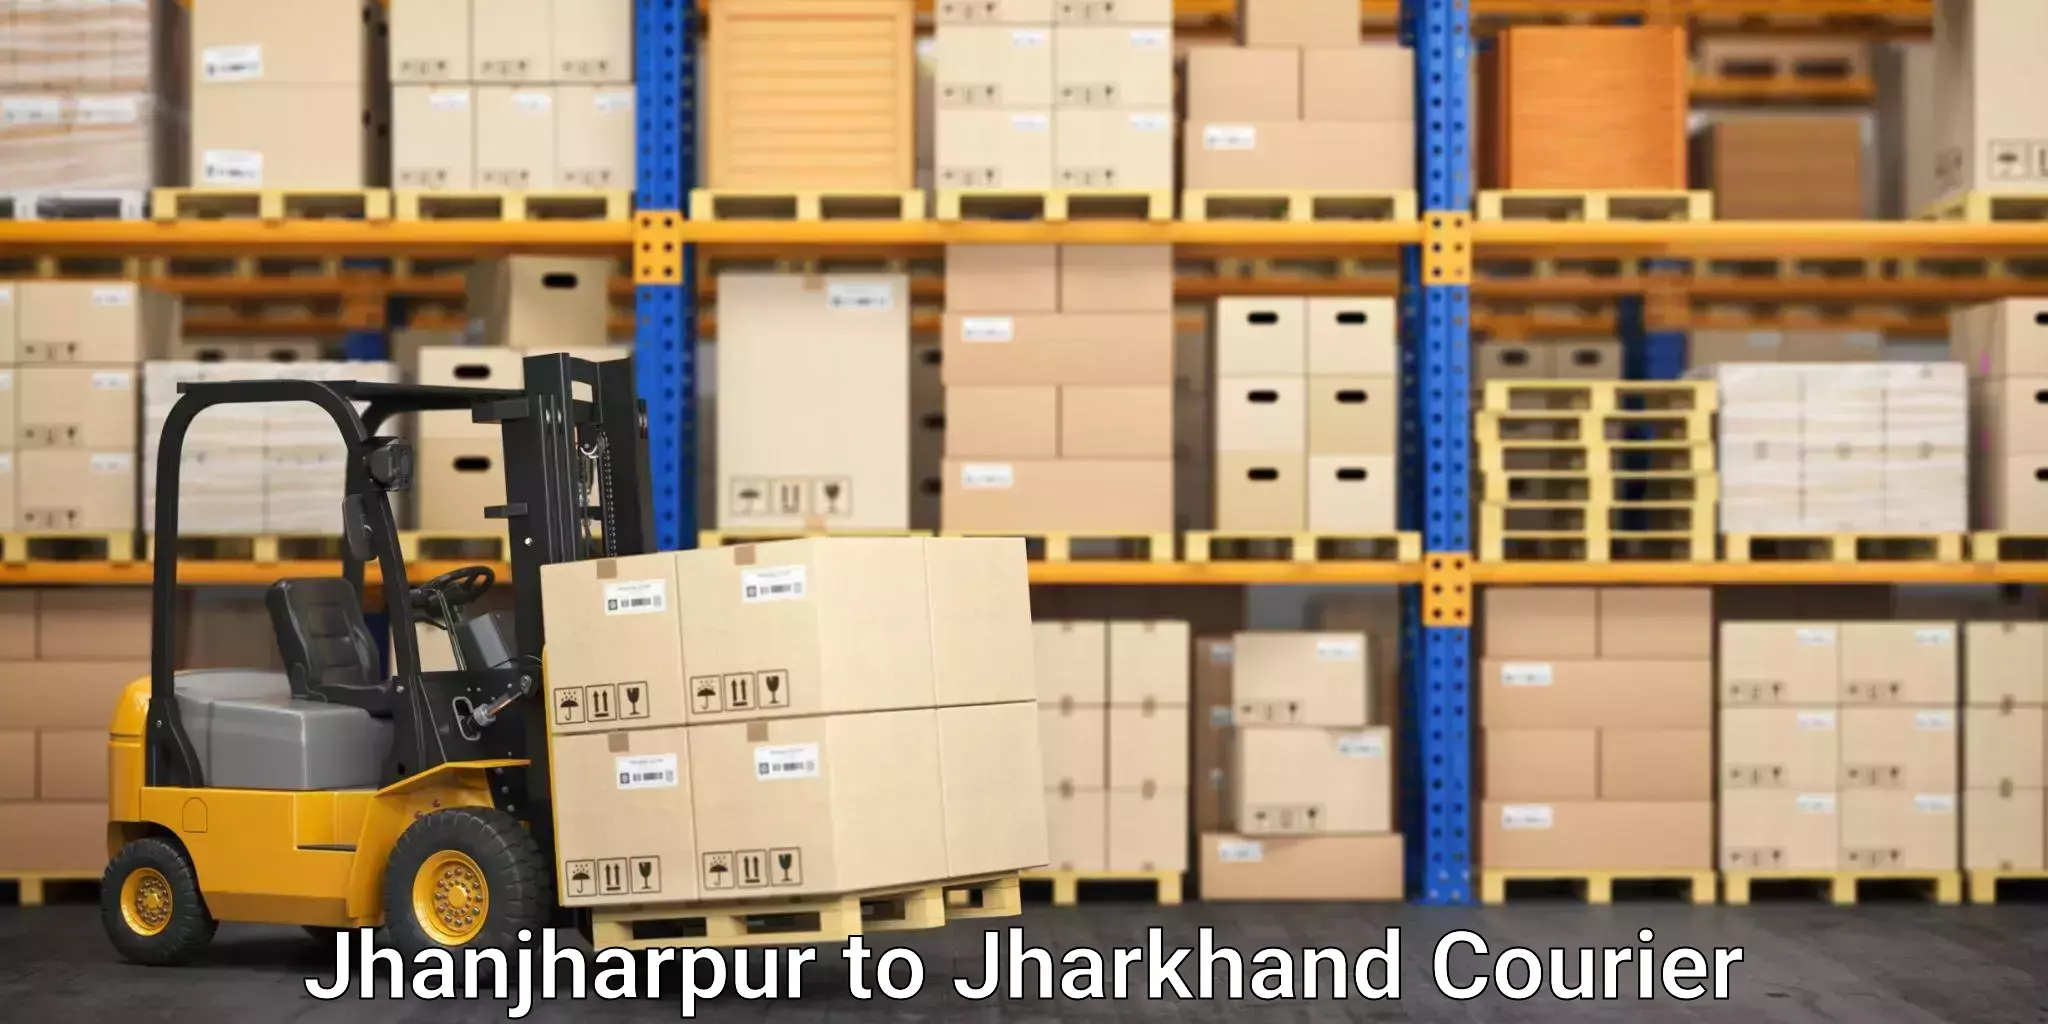 Household goods movers Jhanjharpur to Dhalbhumgarh